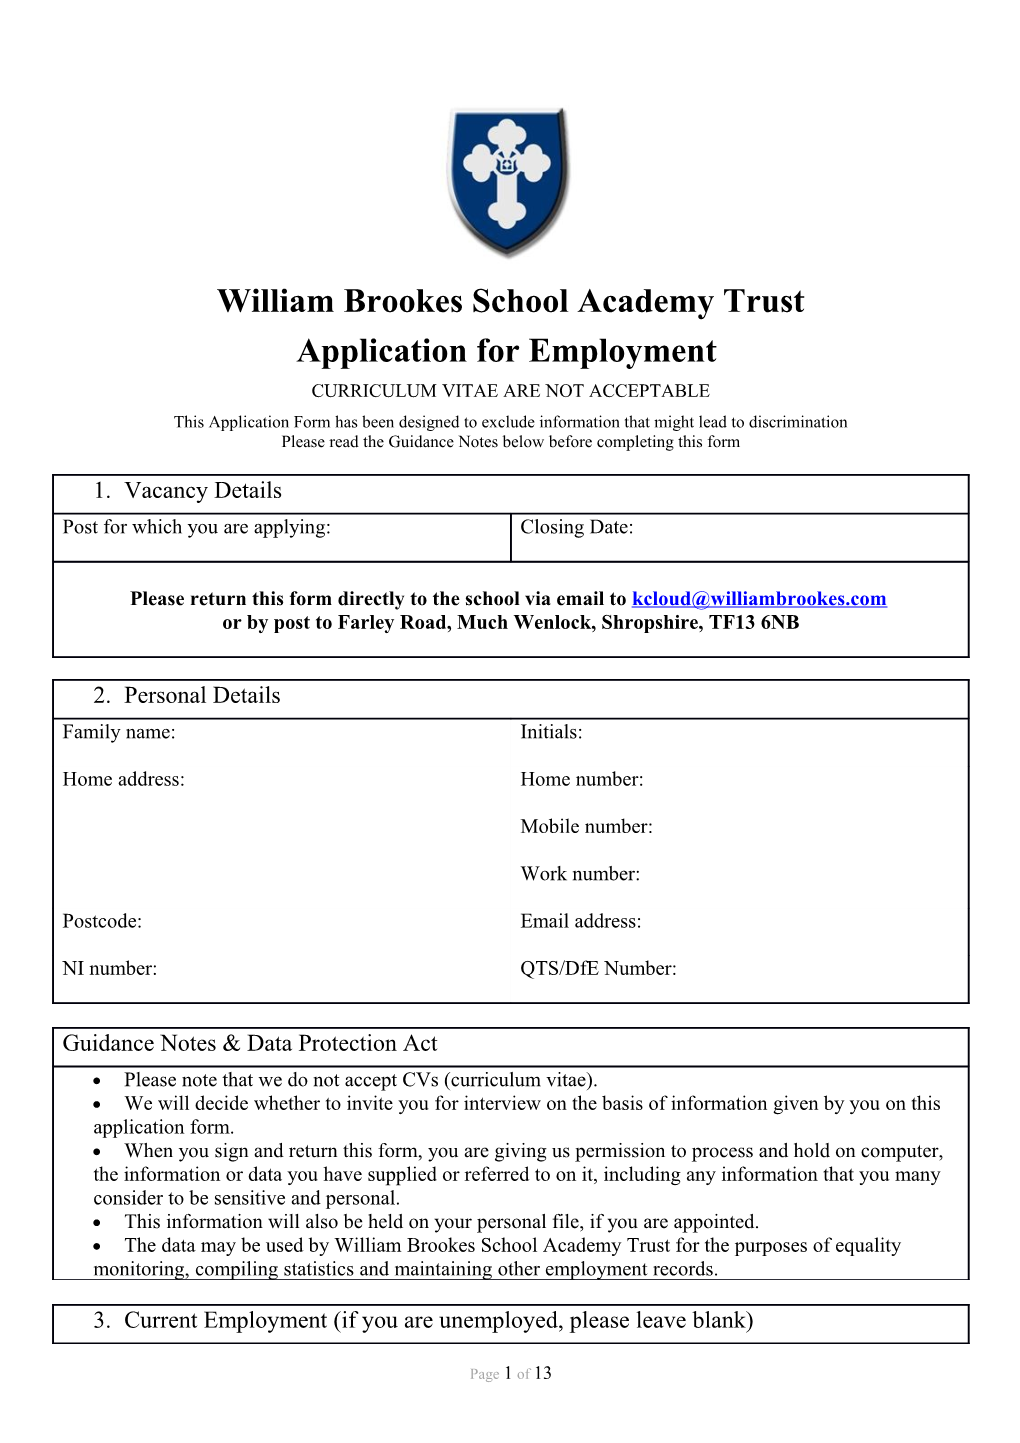 William Brookes School Academy Trust